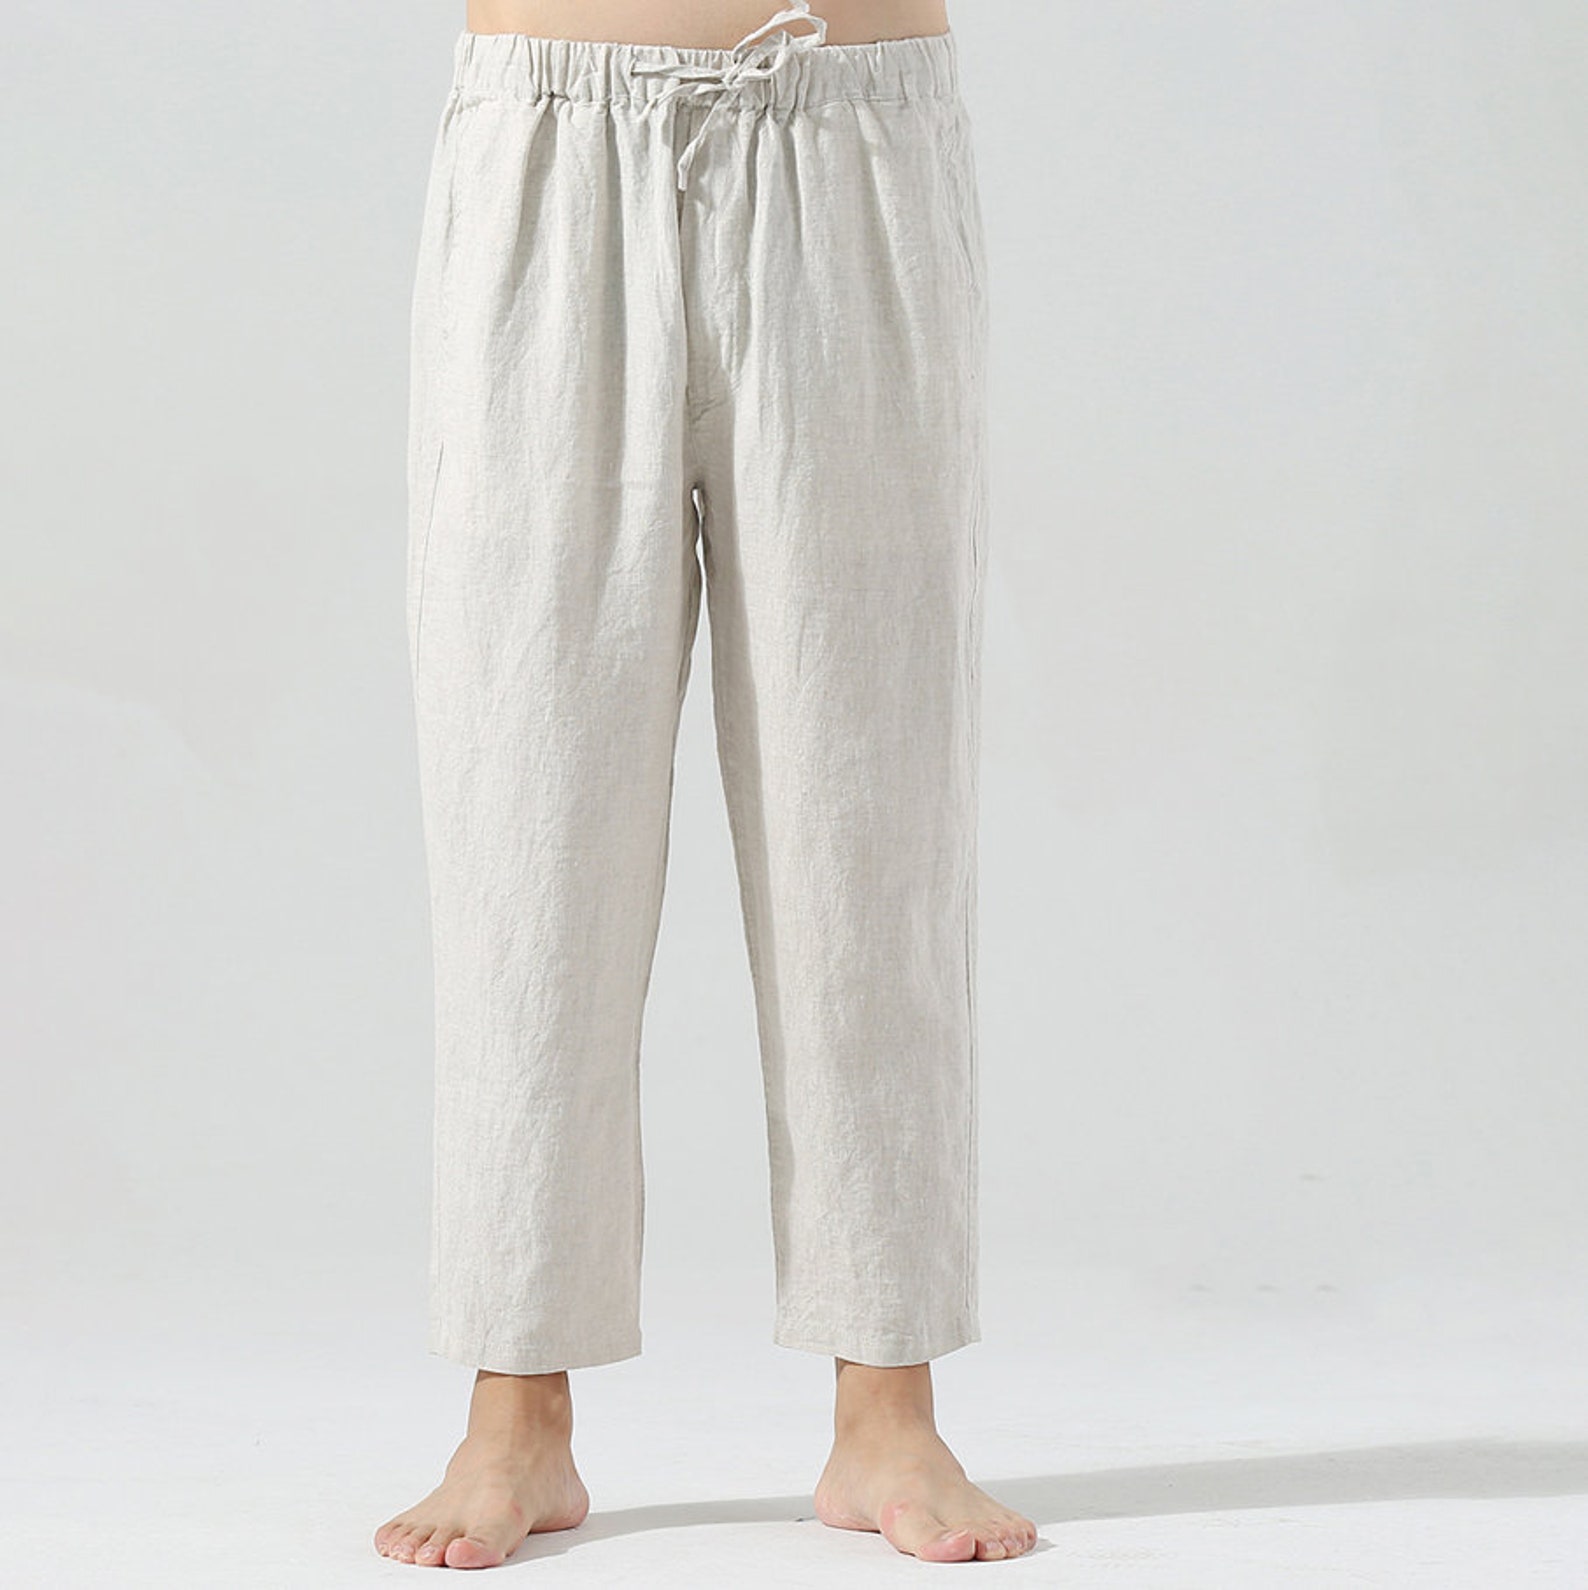 Men linen cropped pants/Men narrow pants/Men thin linen summer | Etsy